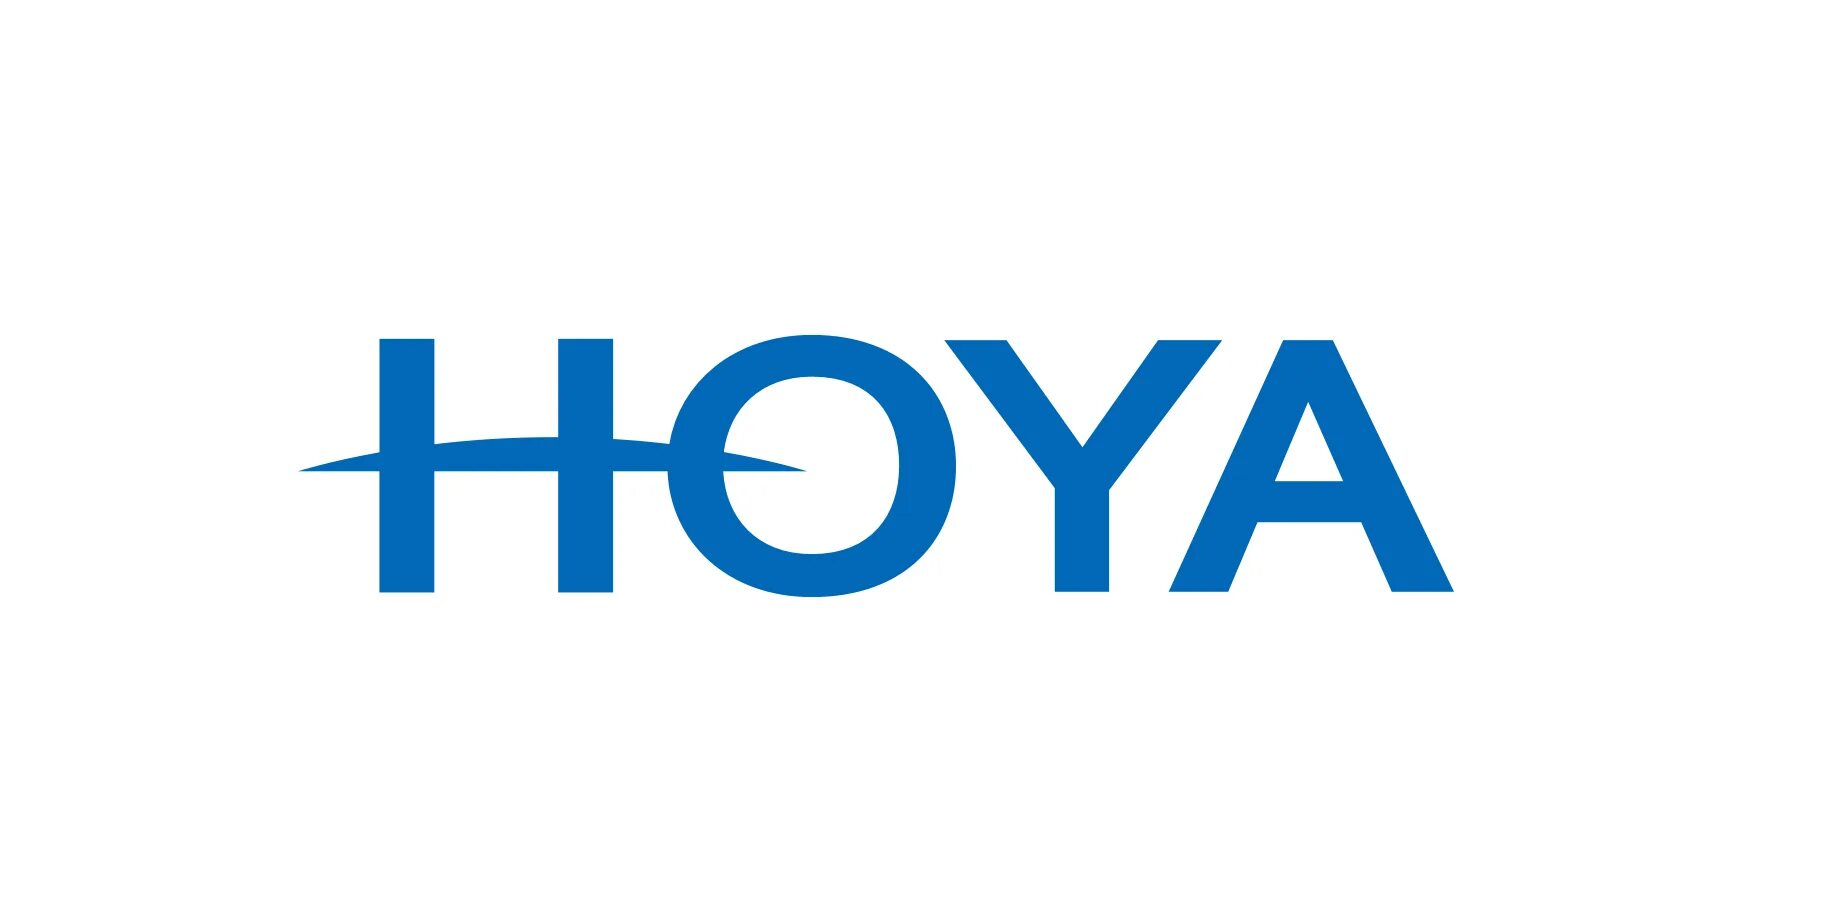 Hoya Lens. Линзы Хойя рус. Hoya Vision Care. Лампа rol-x-28 "Hoya Corporation". Blue control